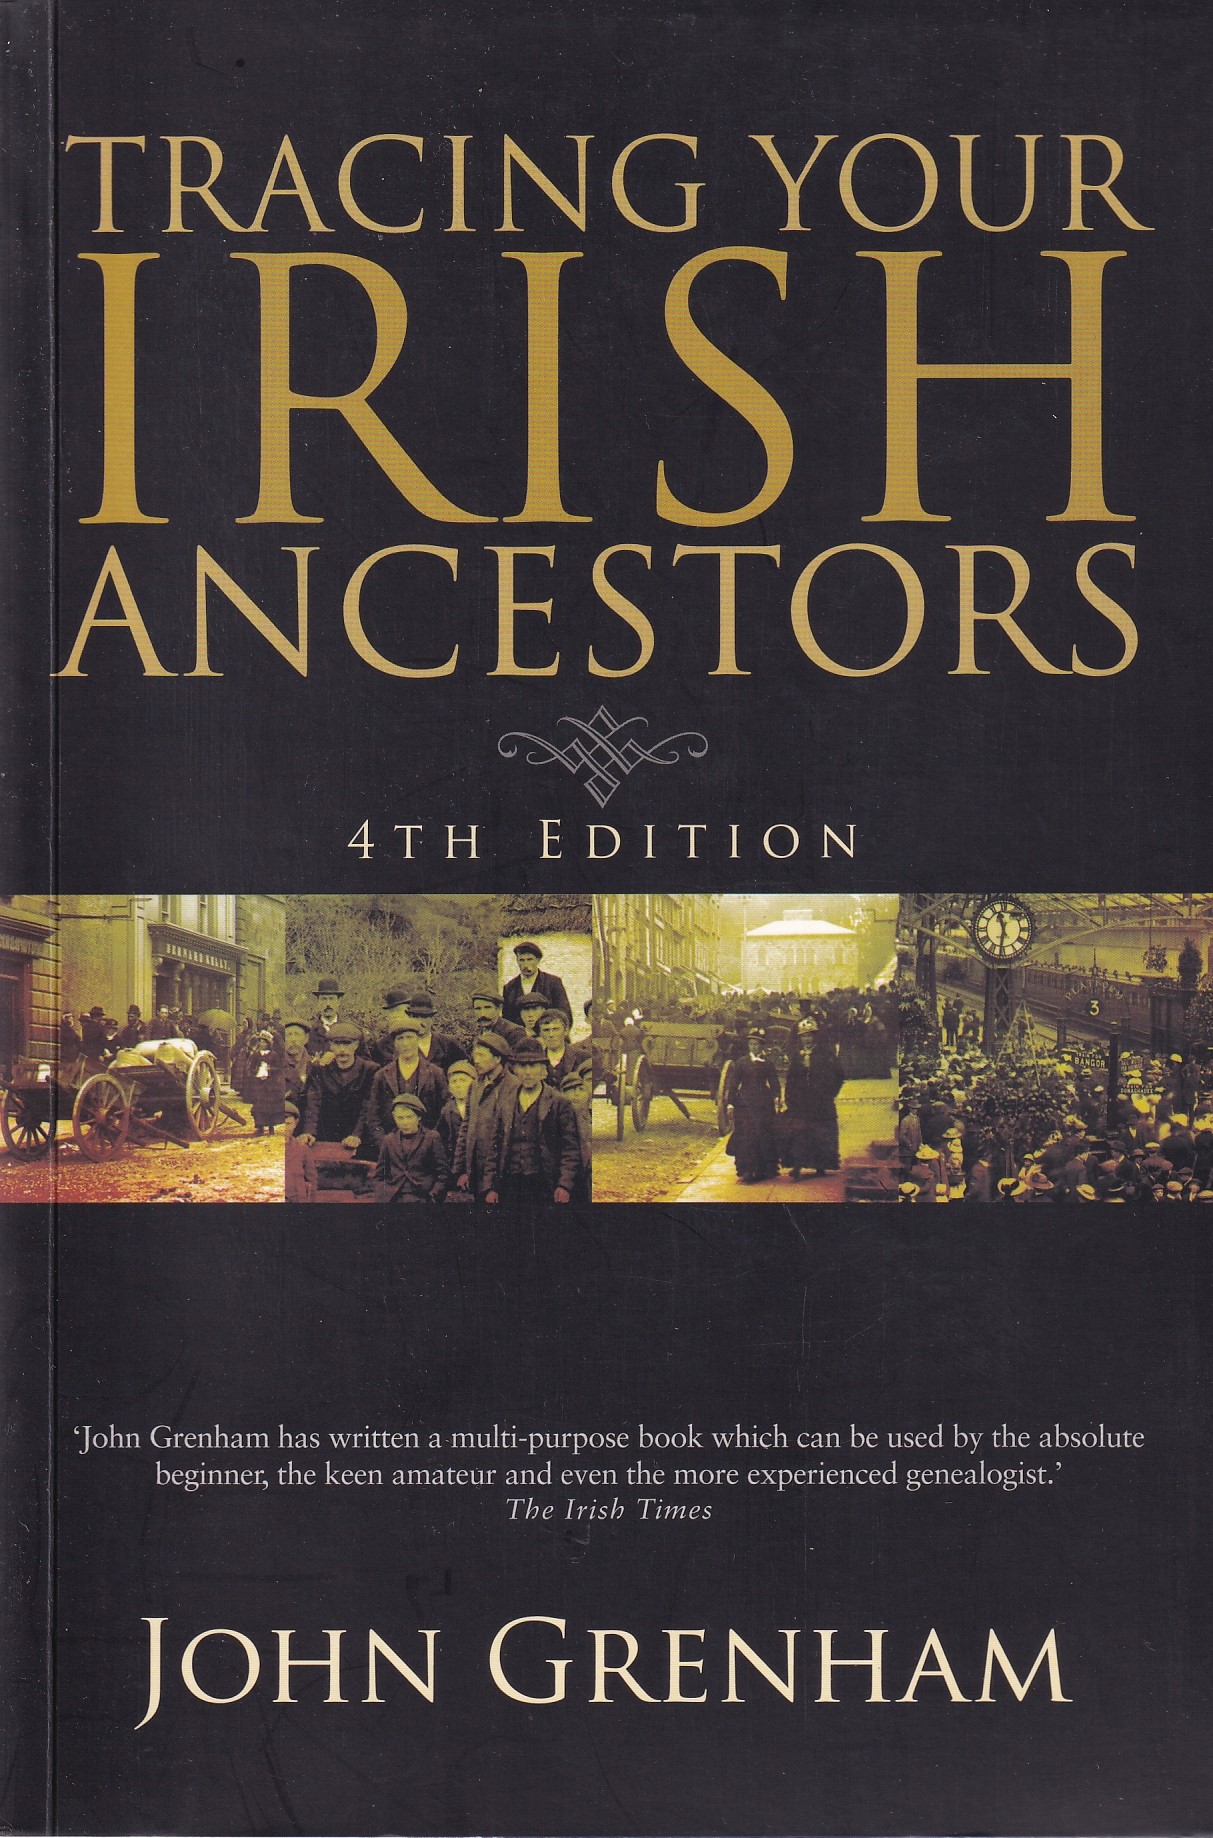 Tracing Your Irish Ancestors | John Grenham | Charlie Byrne's